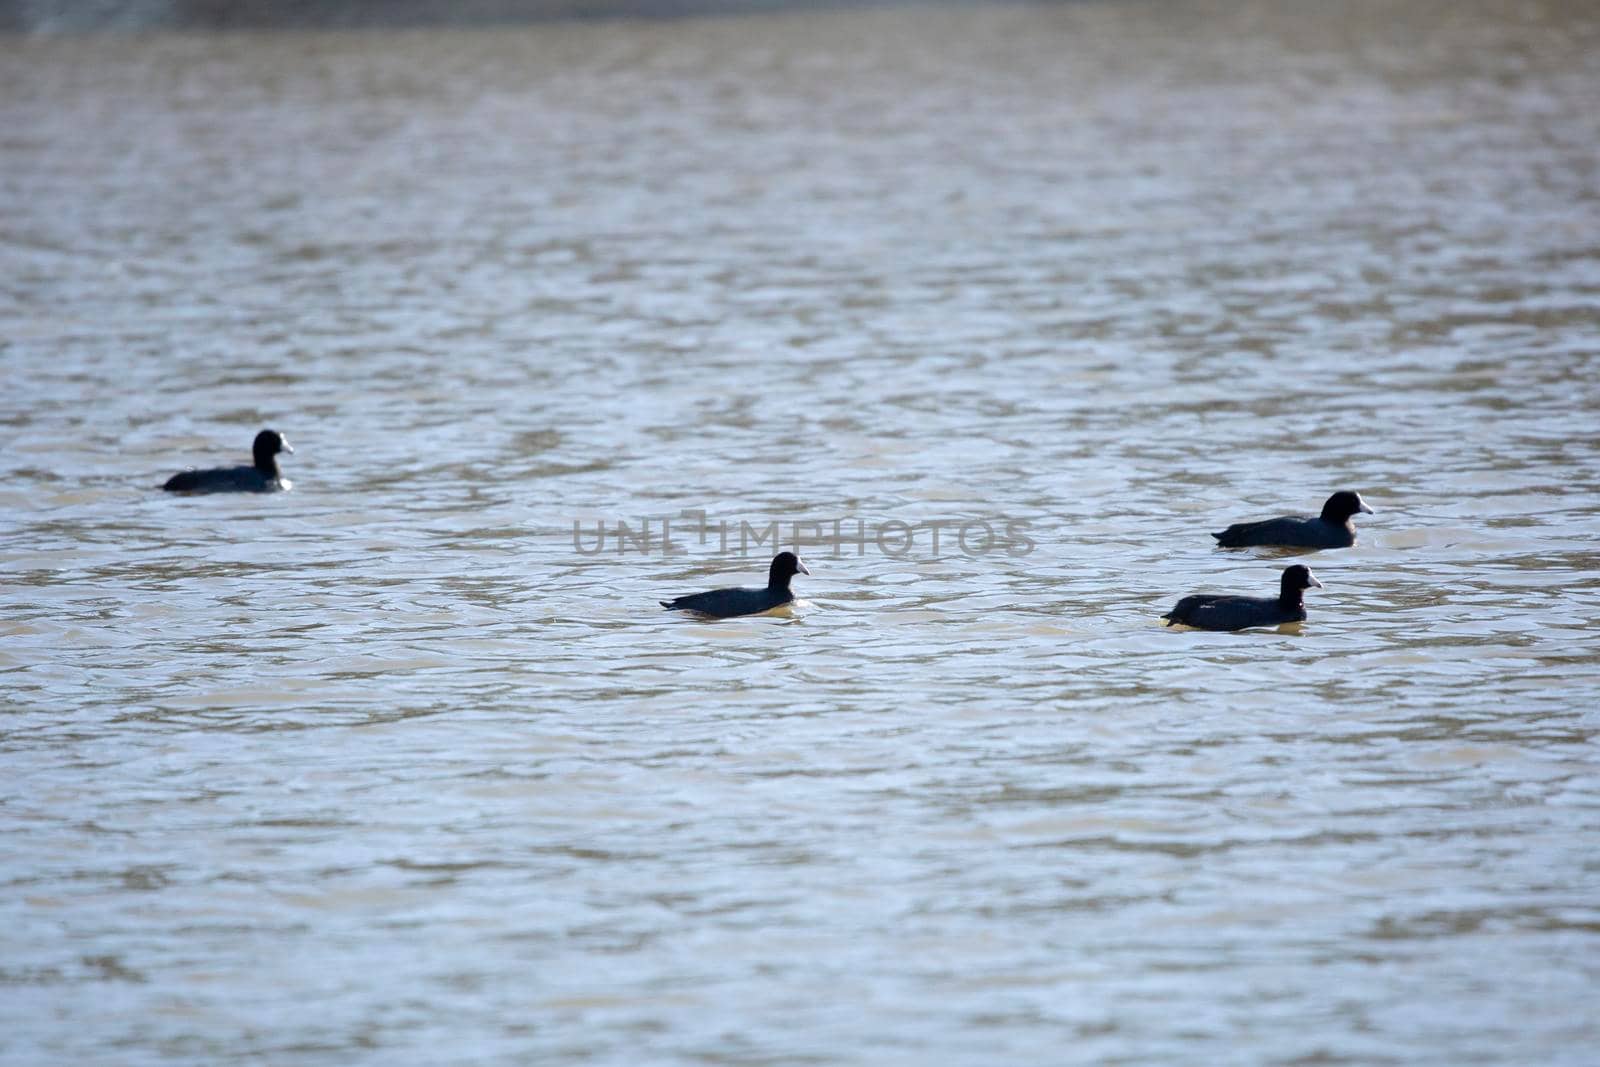 Four duck flock of American coot ducks (Fulica americana) swimming